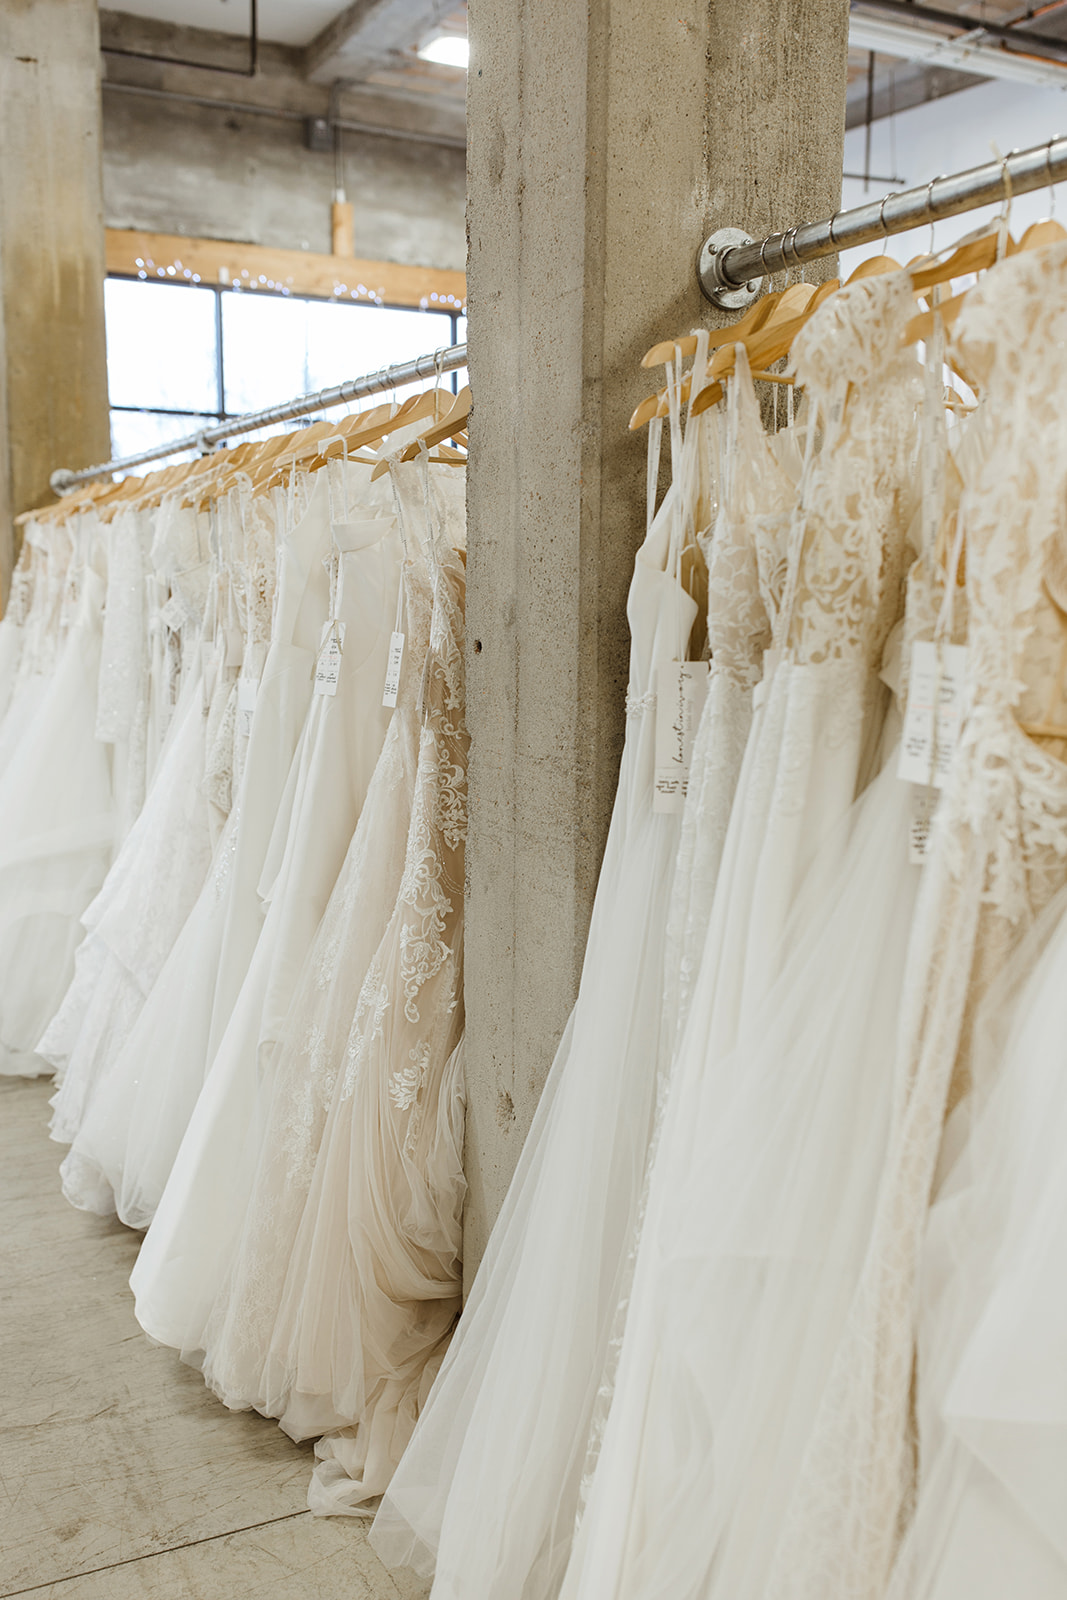 spokane wedding dress sample dresses warehouse